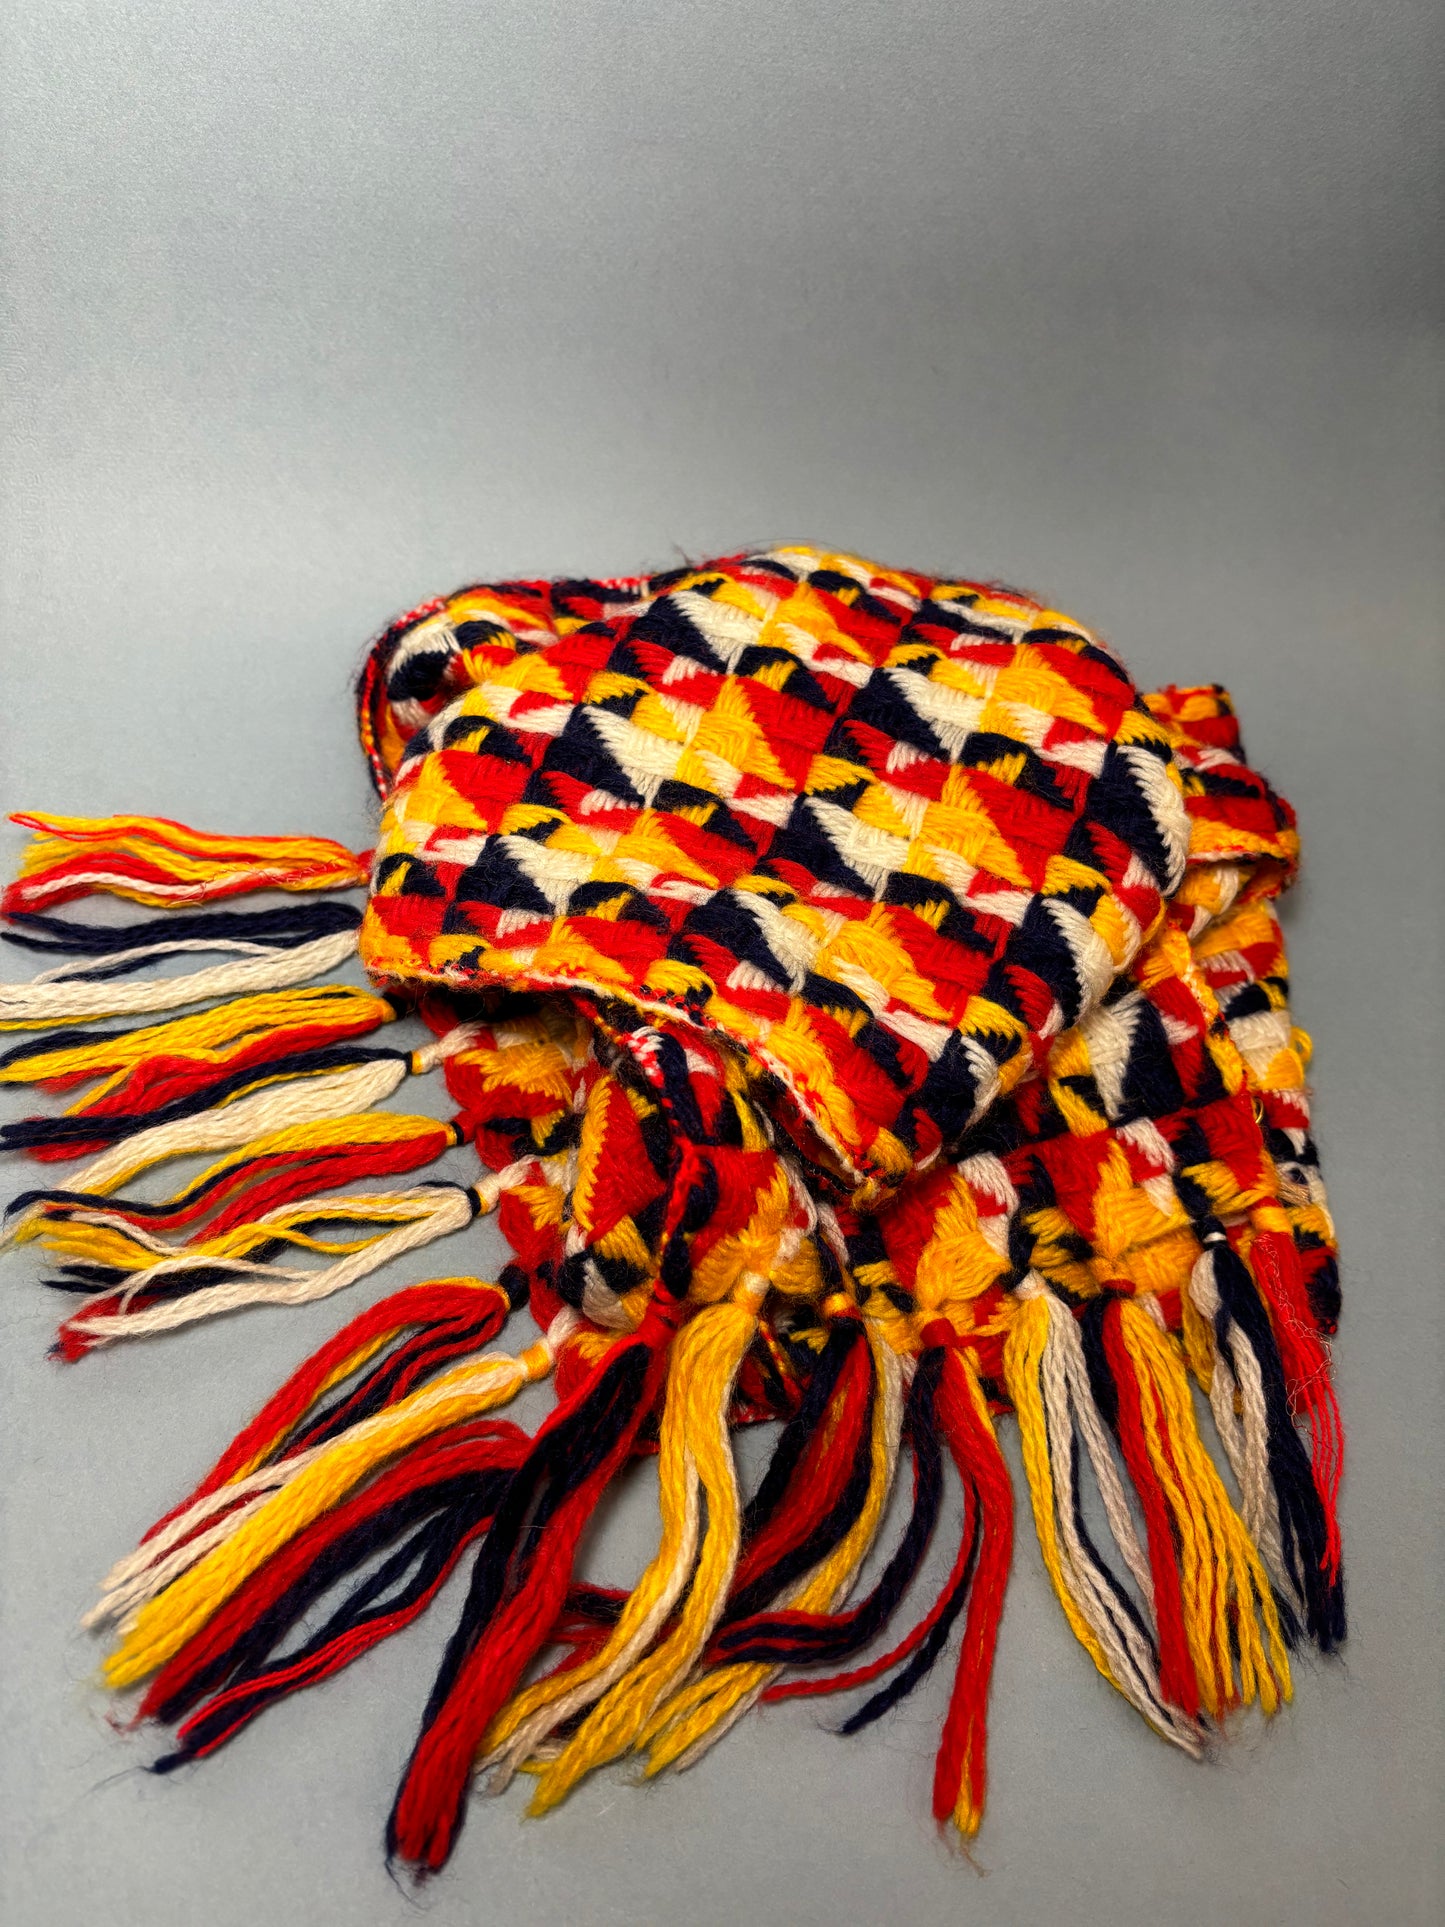 60's 70's Red Navy & Yellow Pinwheel Knit Winter Scarf